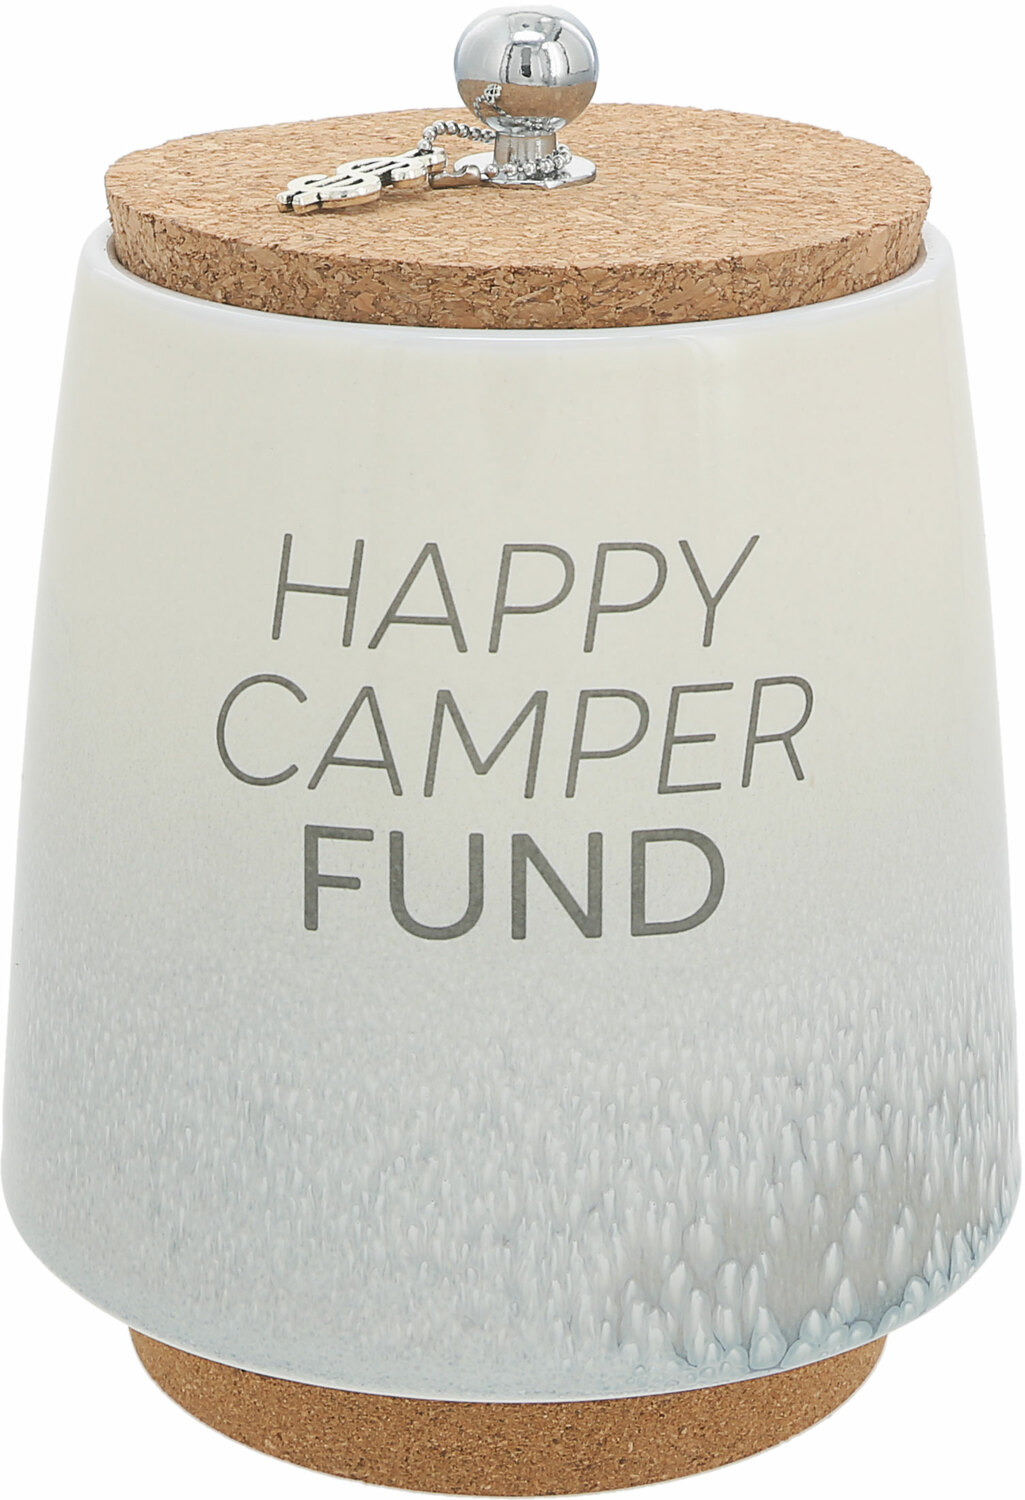 Happy Camper by So Much Fun-d - Happy Camper - 6.5" Ceramic Savings Bank